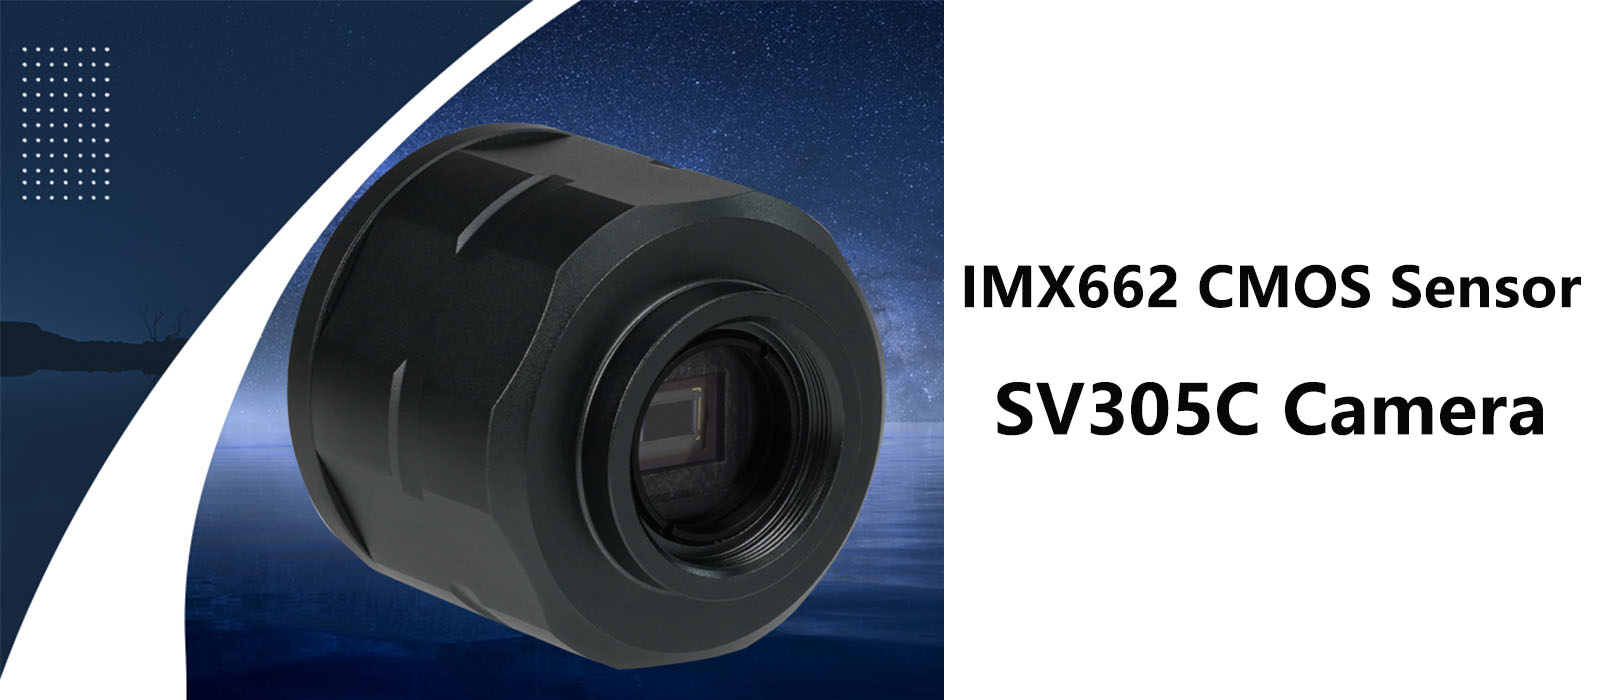 sv305c camera sensor.jpg